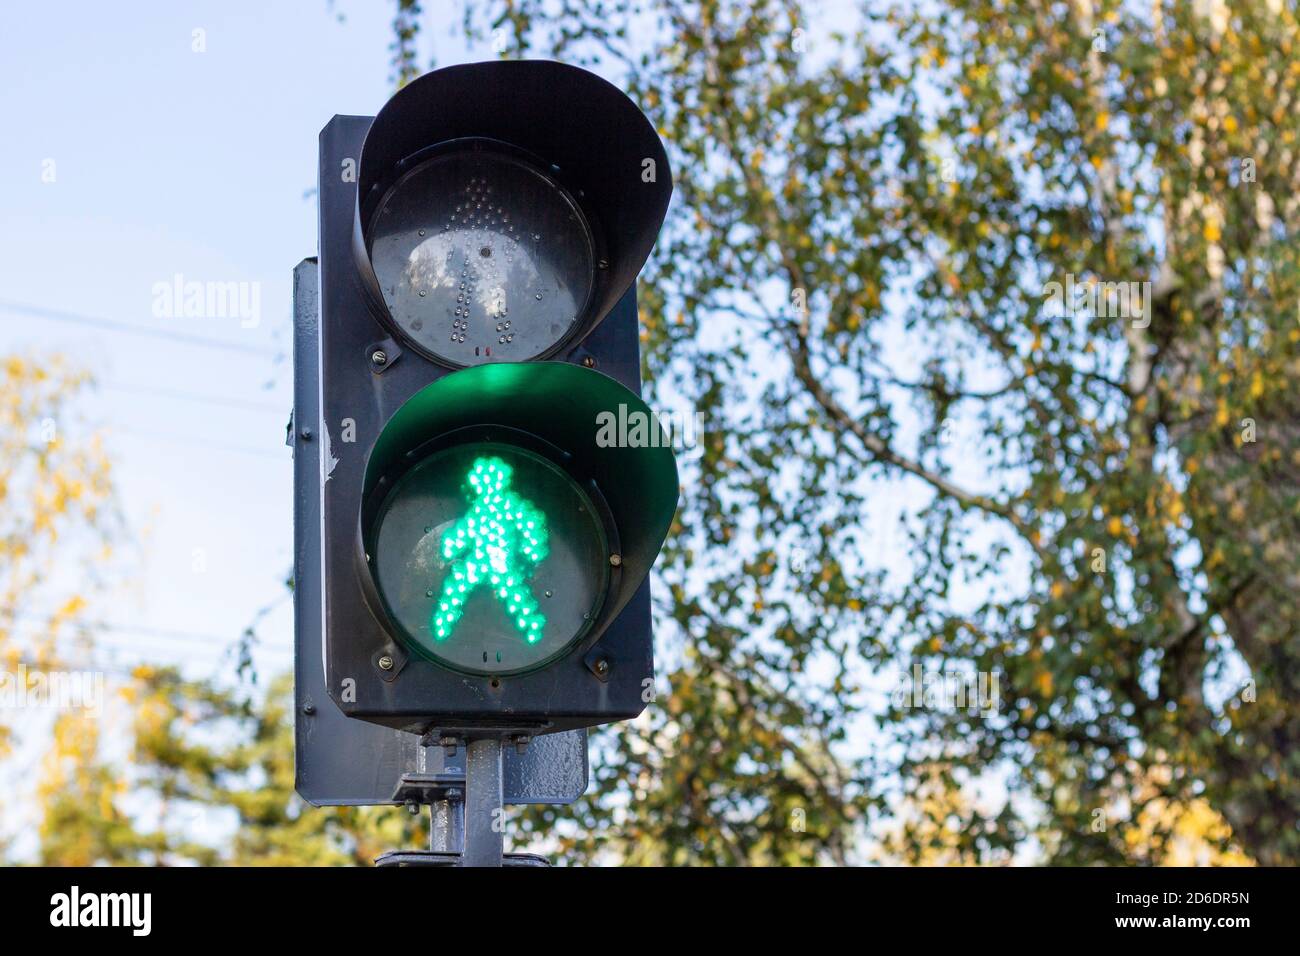 Permissive green traffic light at a pedestrian crossing. Stock Photo